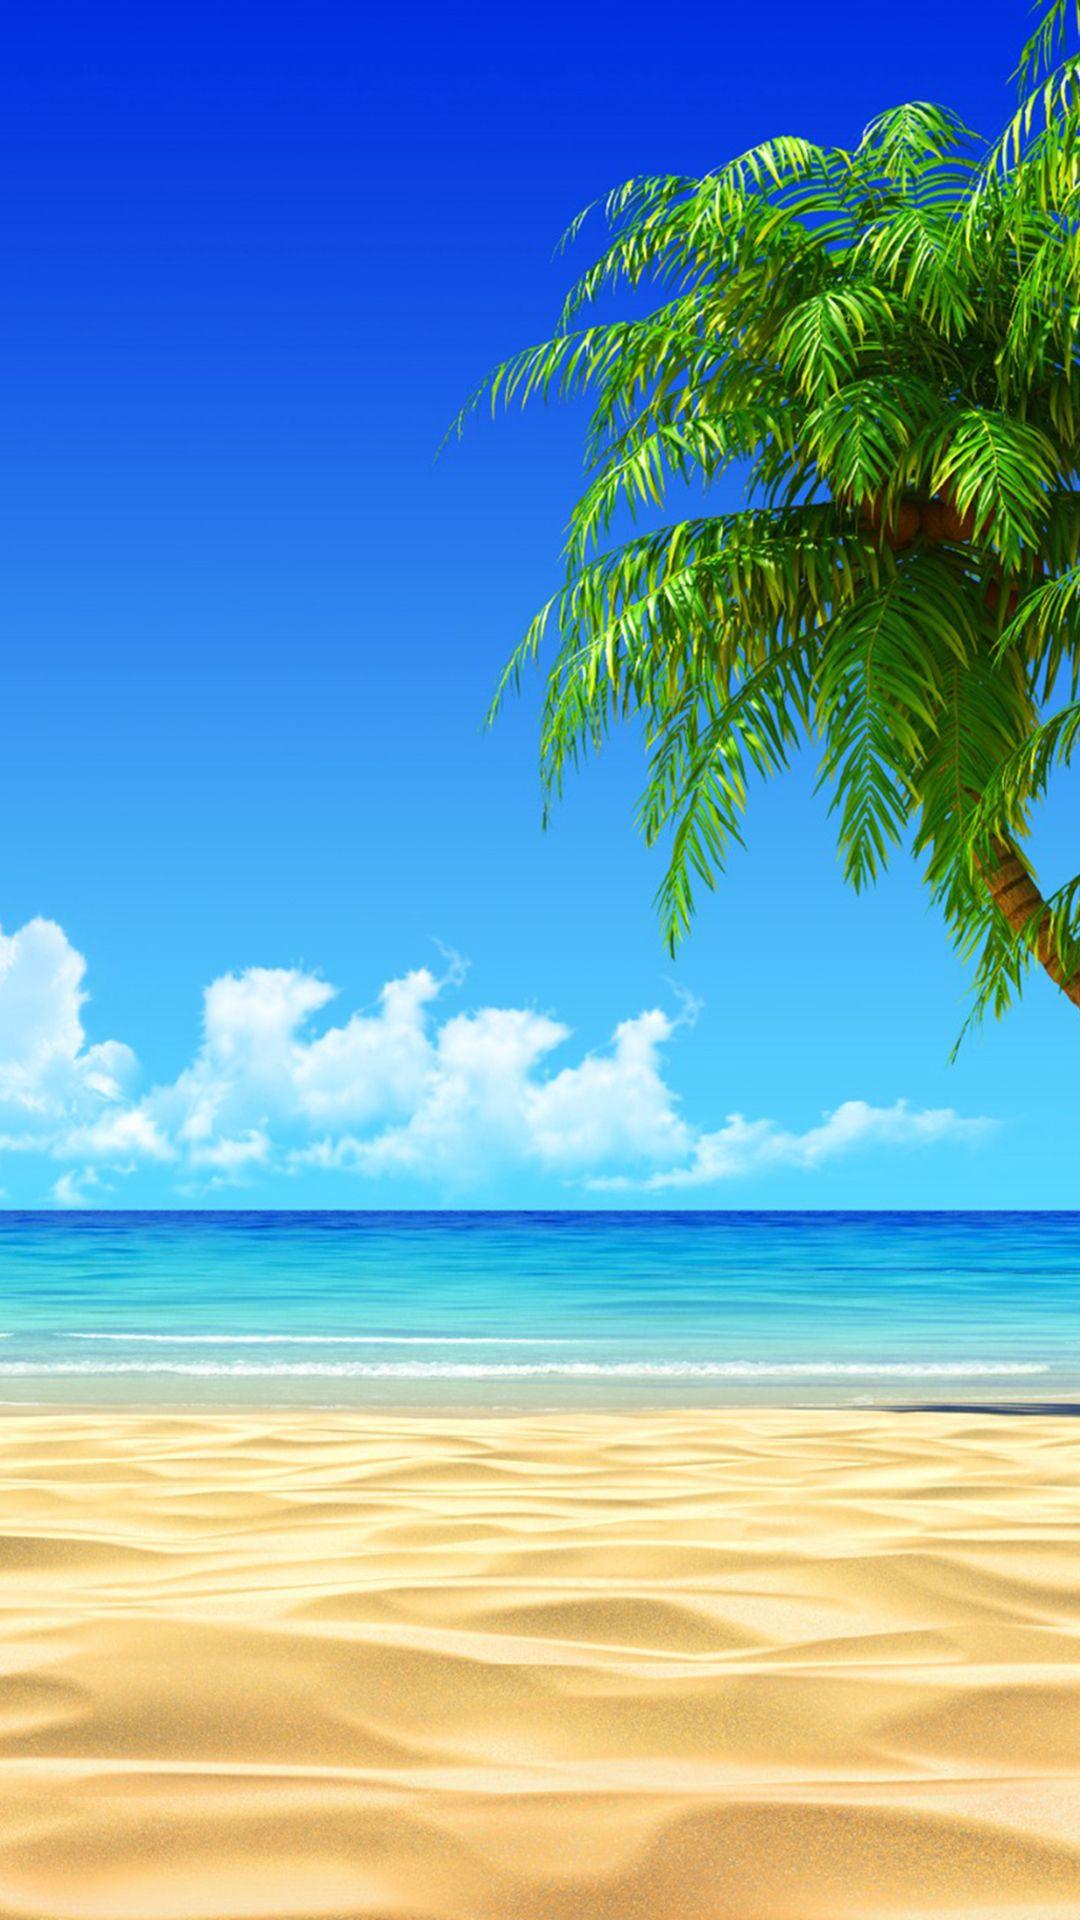 Tropical Beach Coconut Tree Illustration iPhone 6 Plus HD Wallpaper